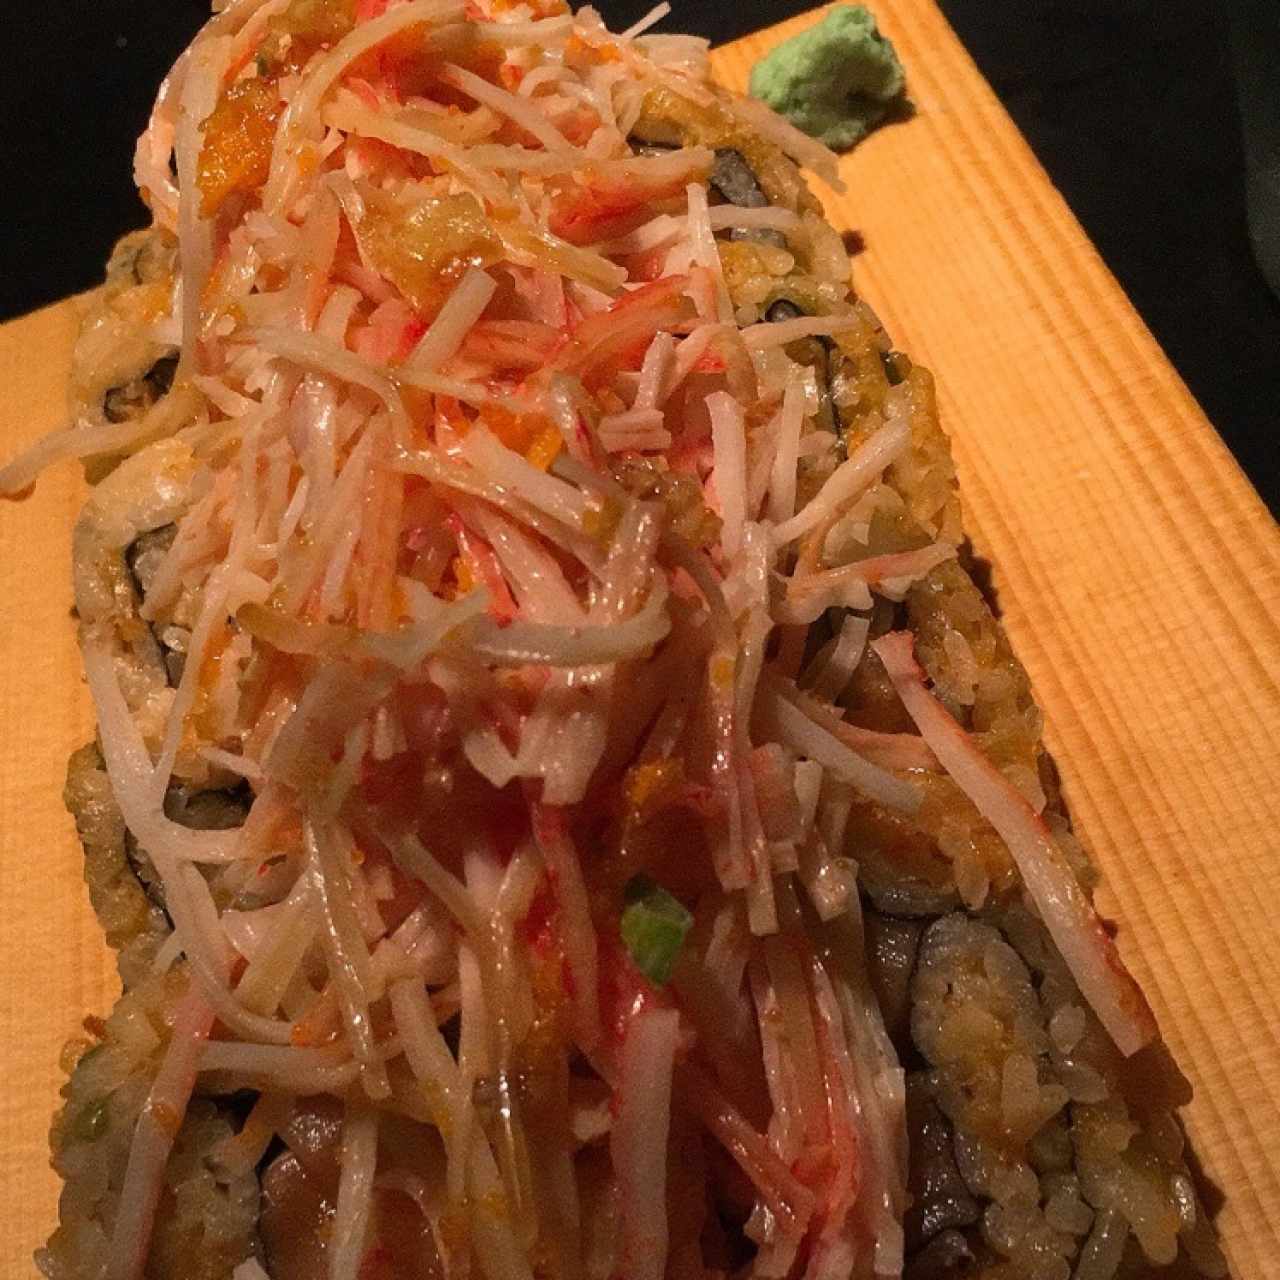 Alaska Roll (crunch tempura dentro del arroz) +topping de dinamita